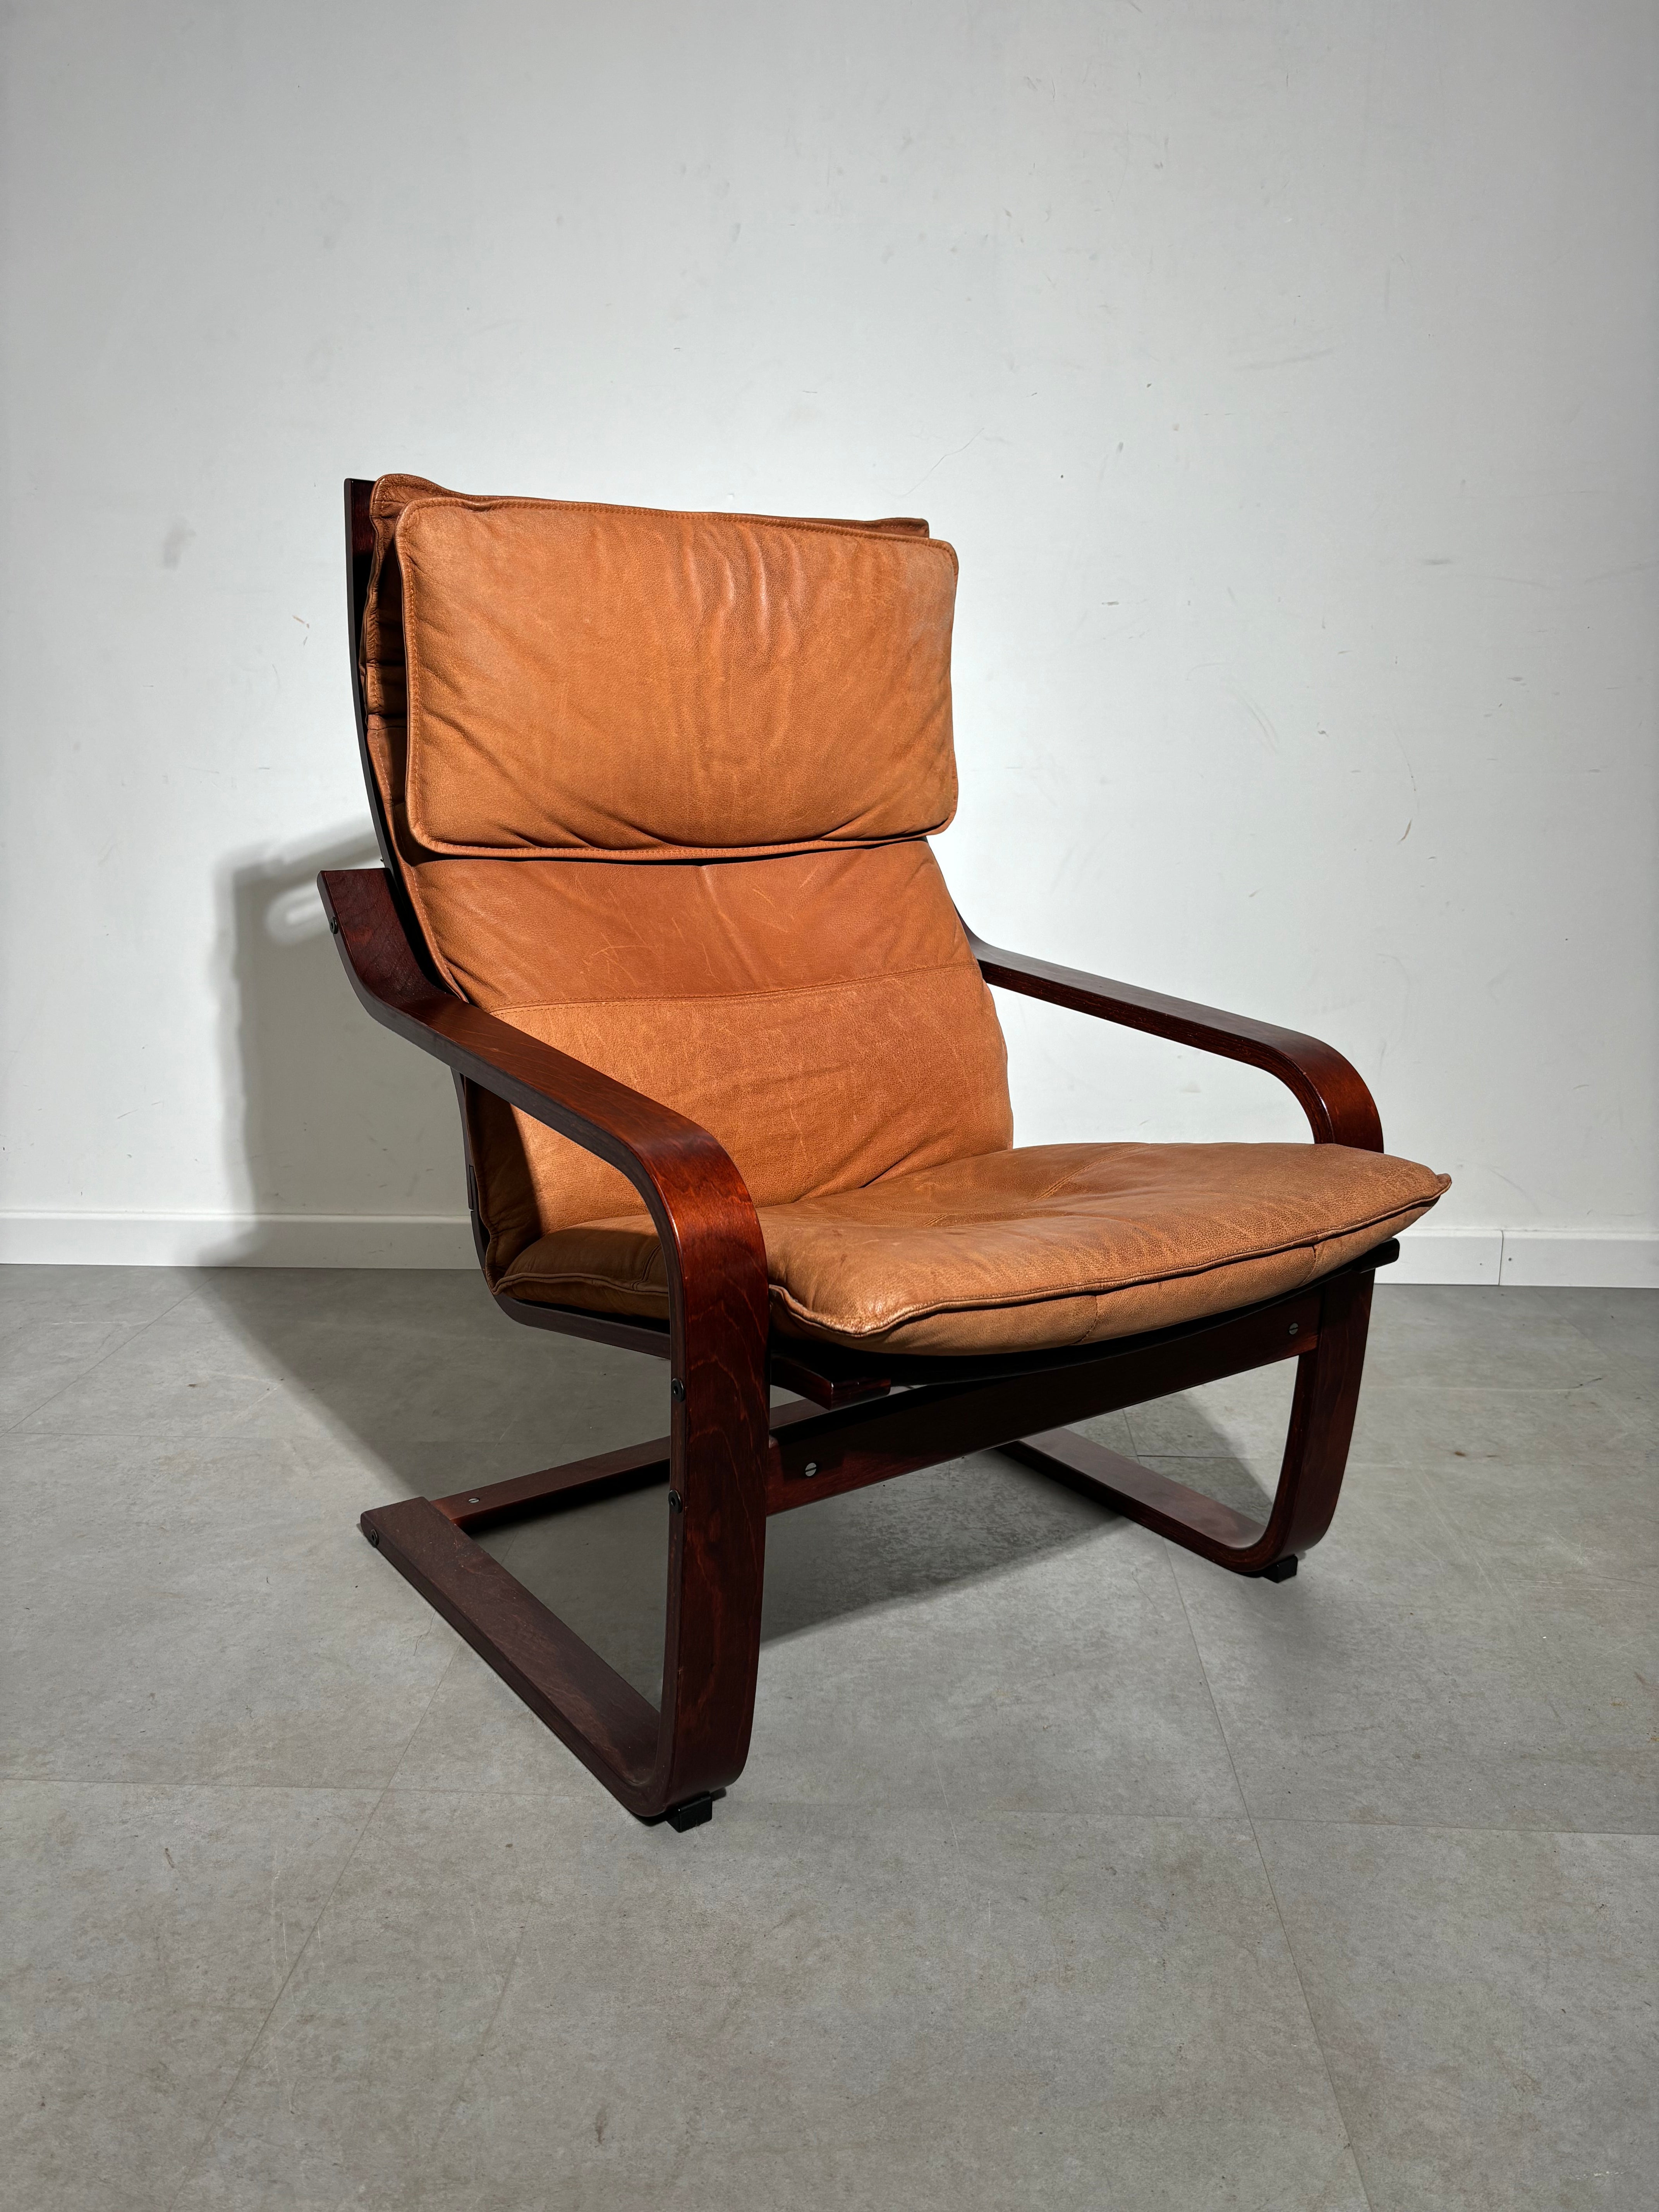 1980’s Ikea Lounge Chair “Poang”